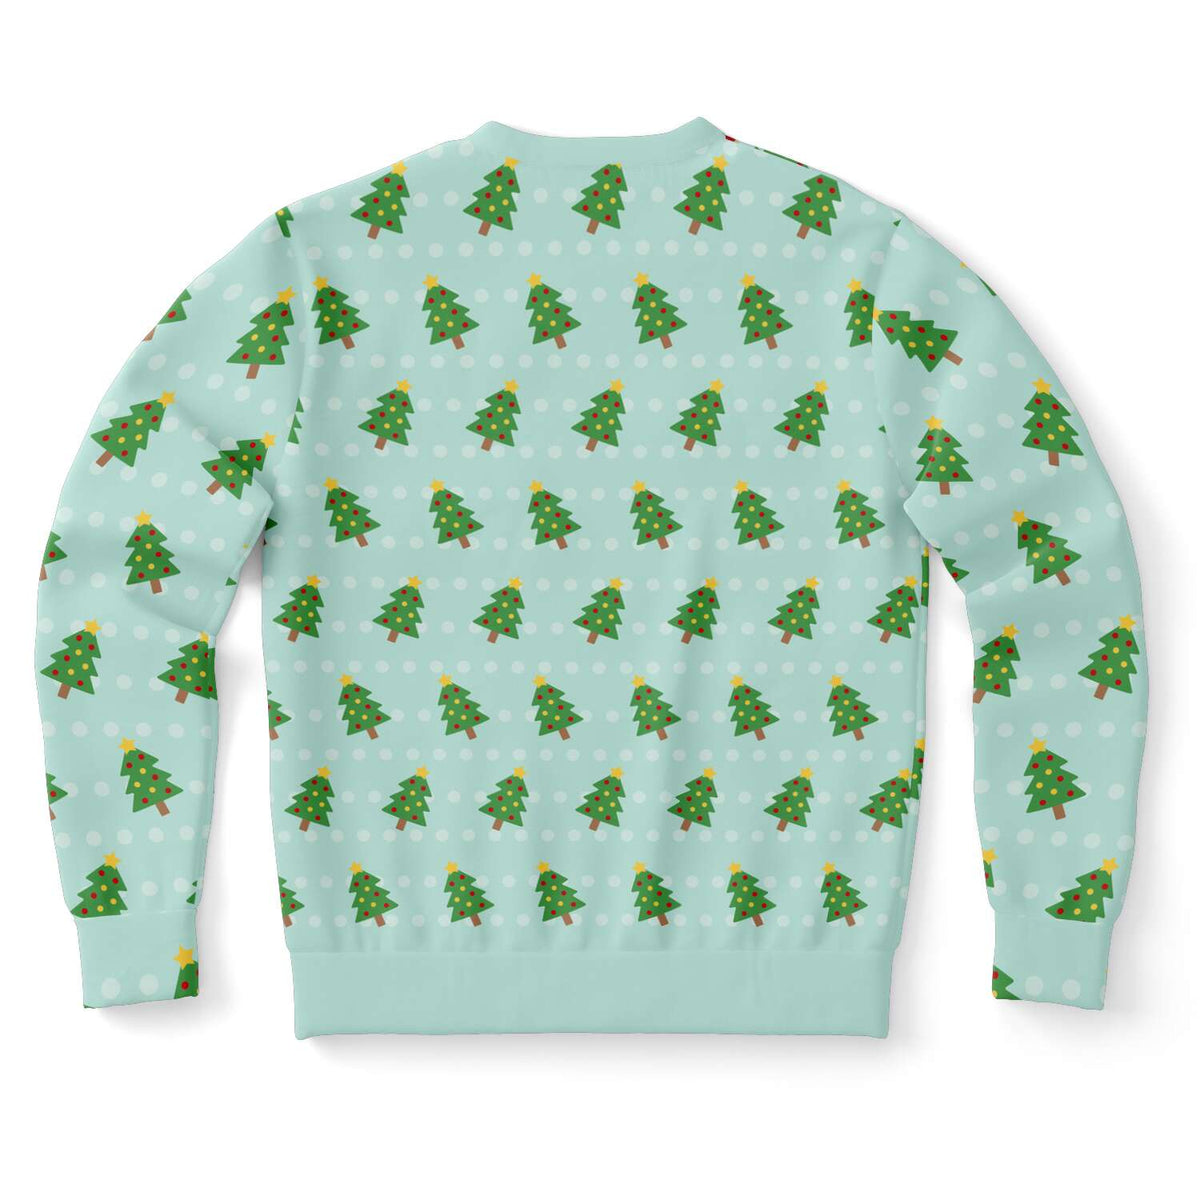 Unwrap me - Christmas Sweater